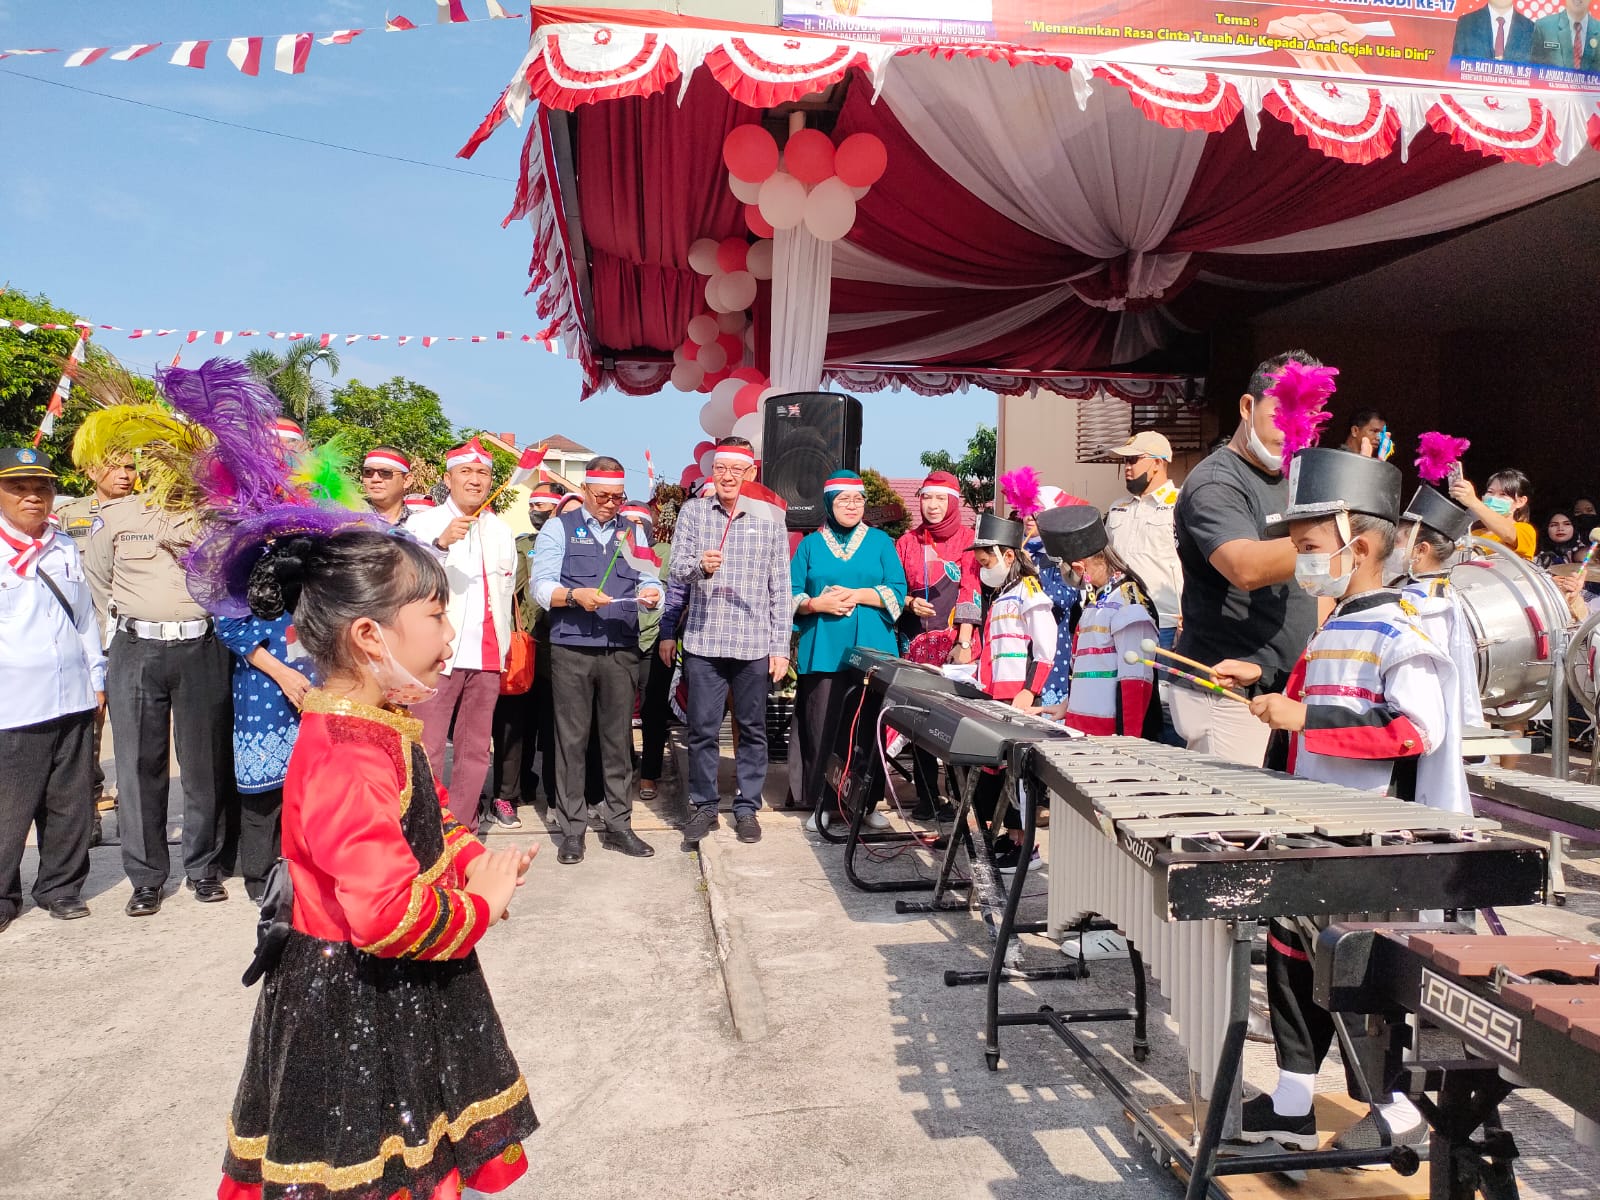 Gemes, Lihat Ekspresi Anak PAUD di Karnaval Budaya Palembang